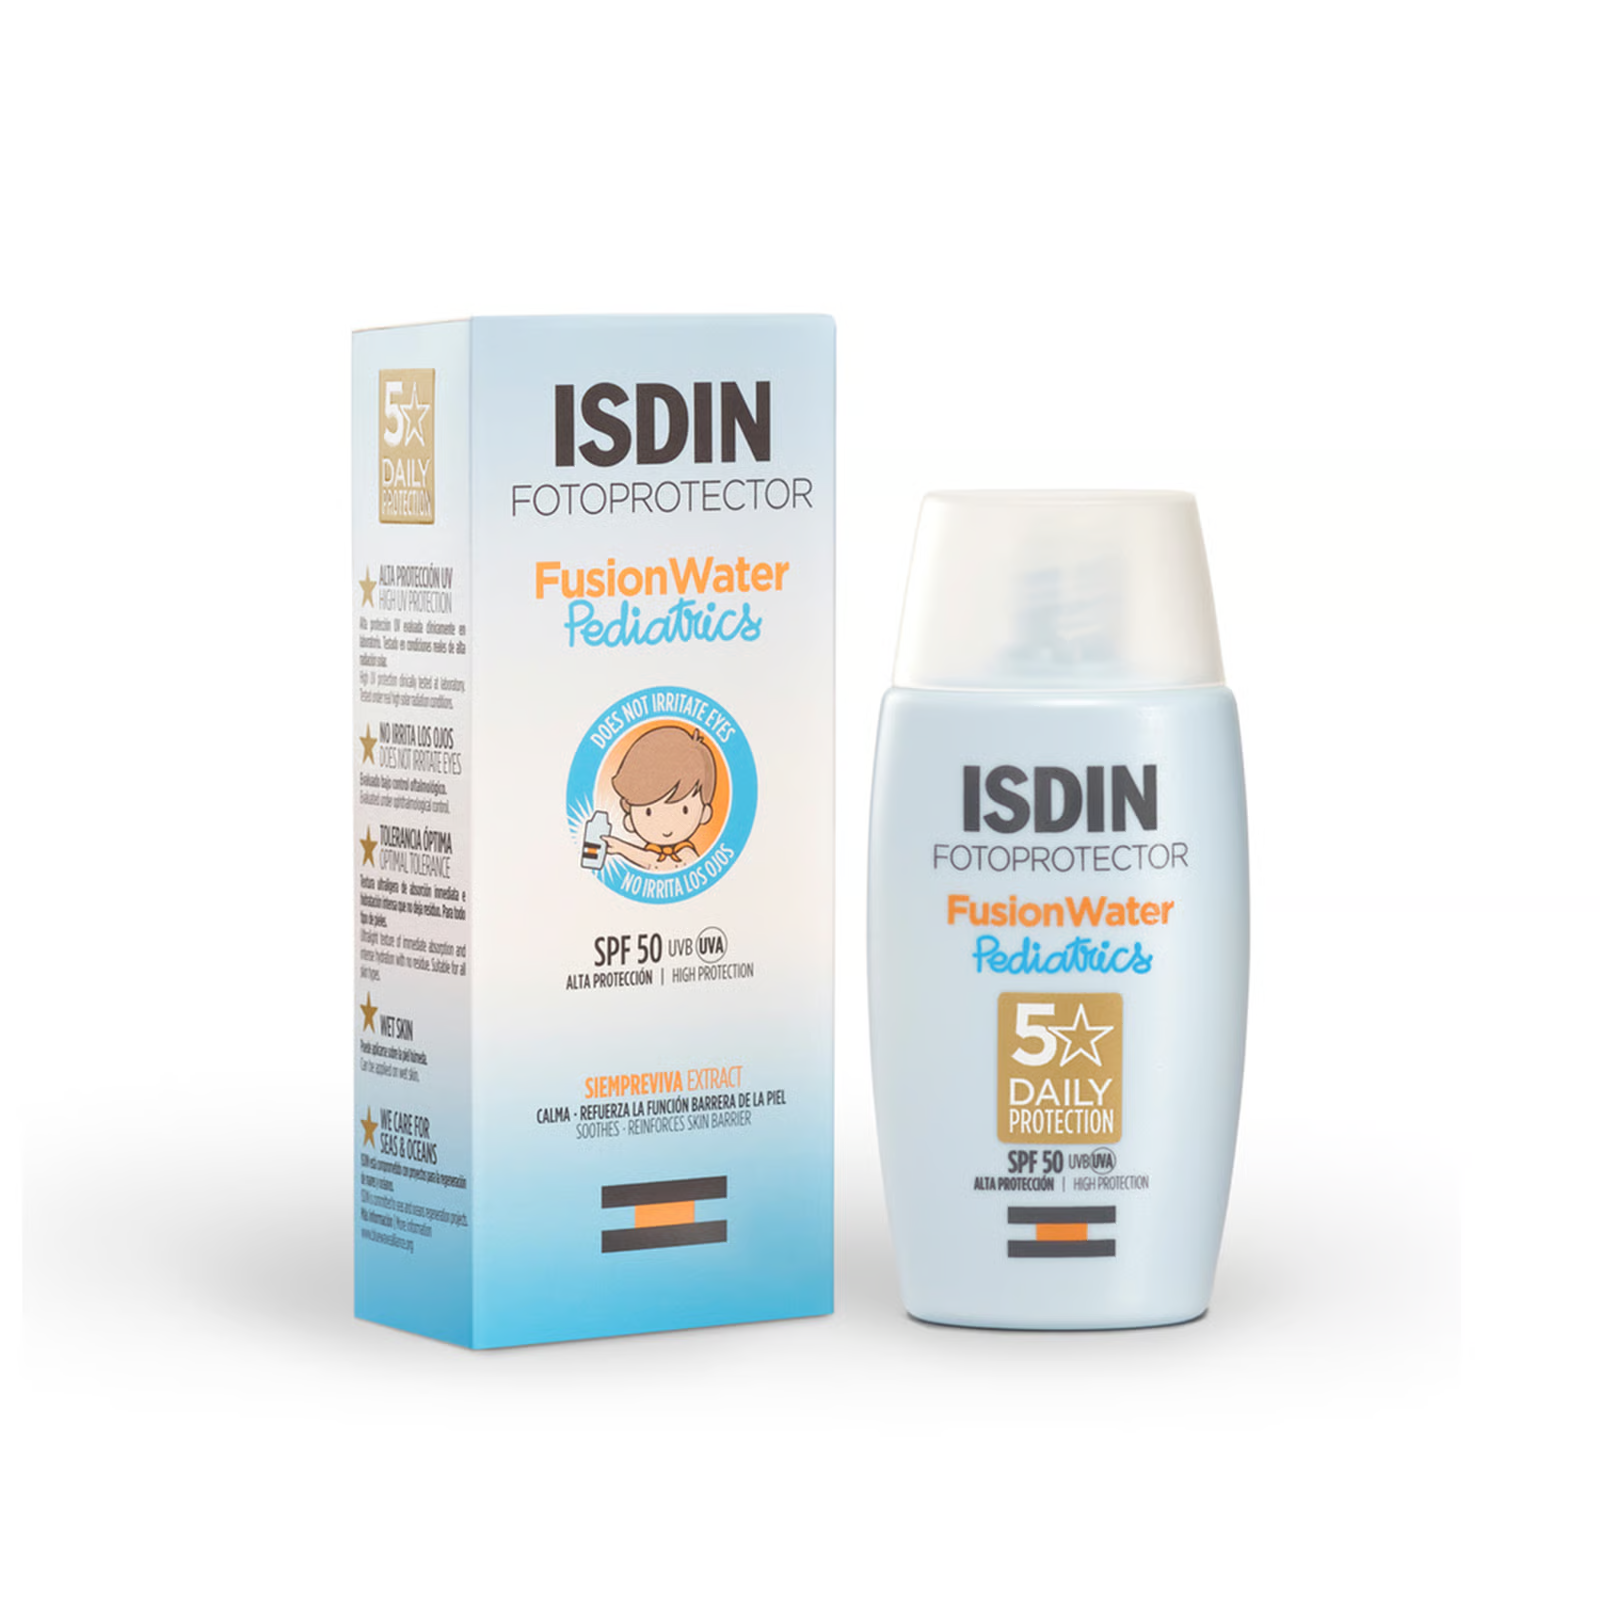 ISDIN Fotoprotetor Pediatrics Fusion Water FPS50 50ml